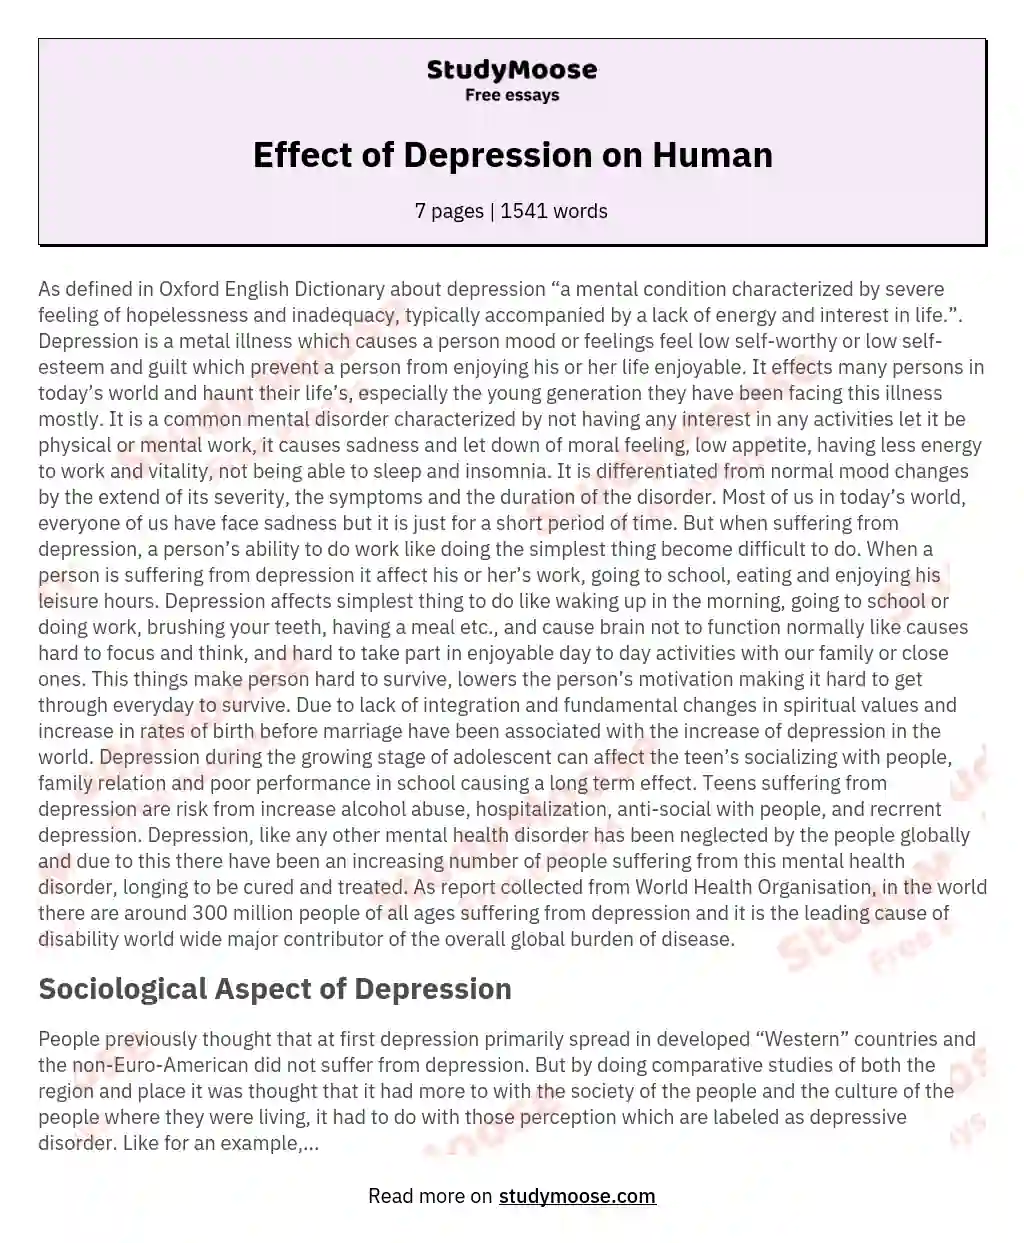 Effect of Depression on Human essay